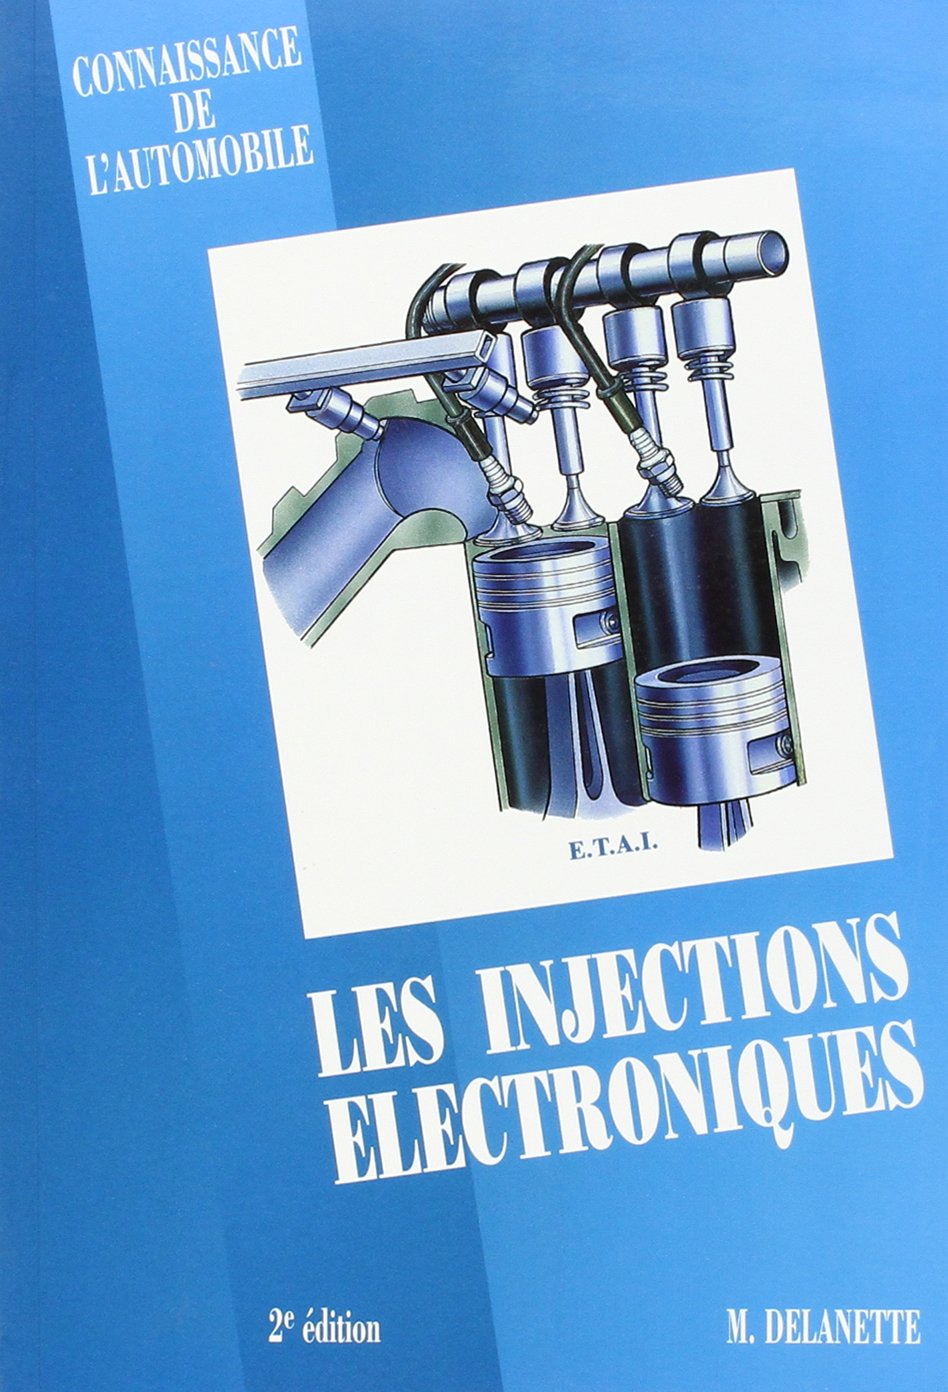 Les Injections Electroniques